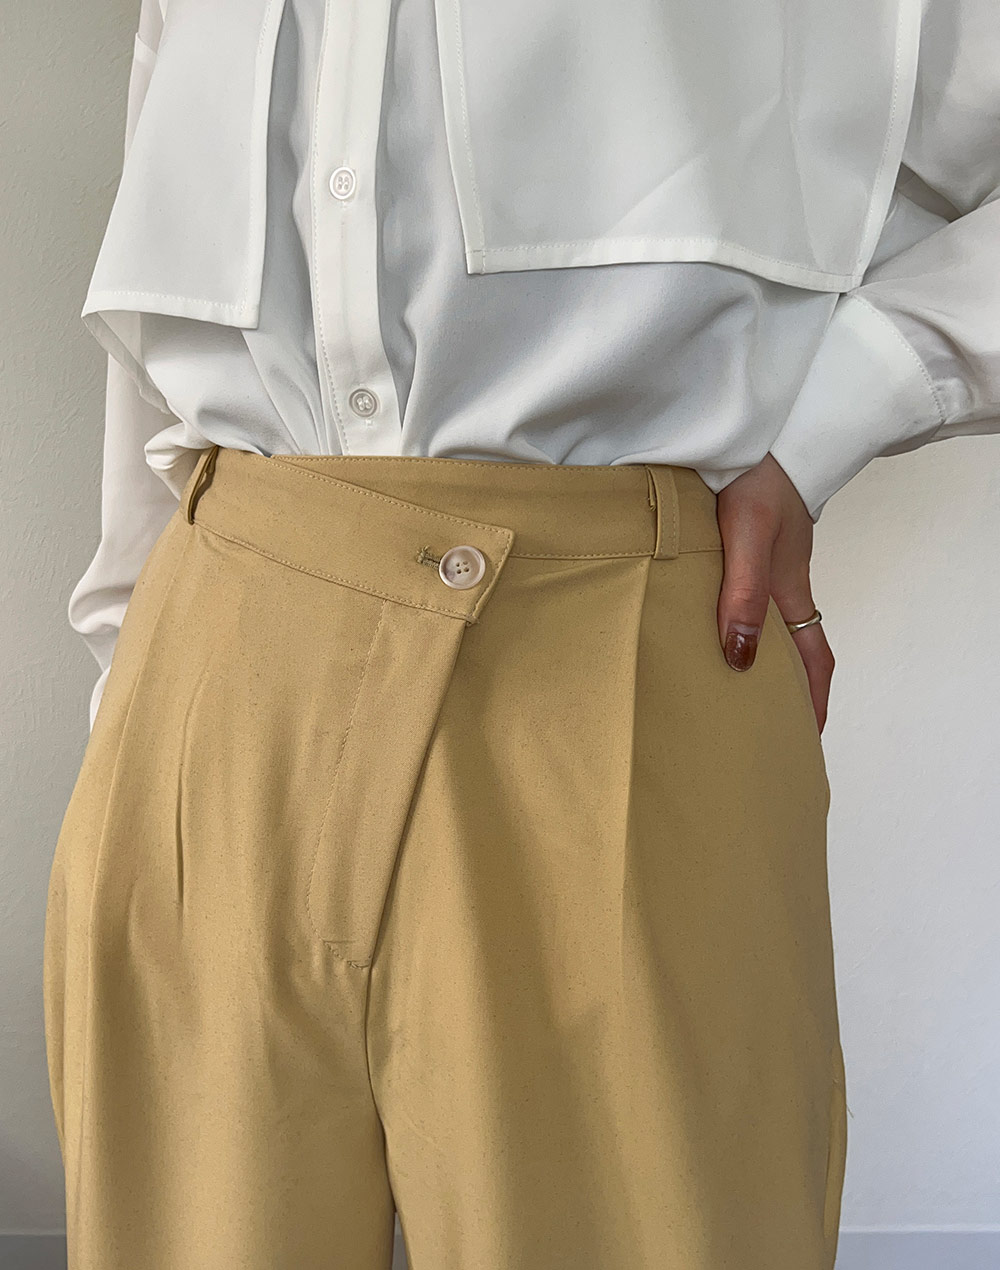 shift button pants・t278149（パンツ/パンツ）| _yuzuki22 | 東京ガールズマーケット